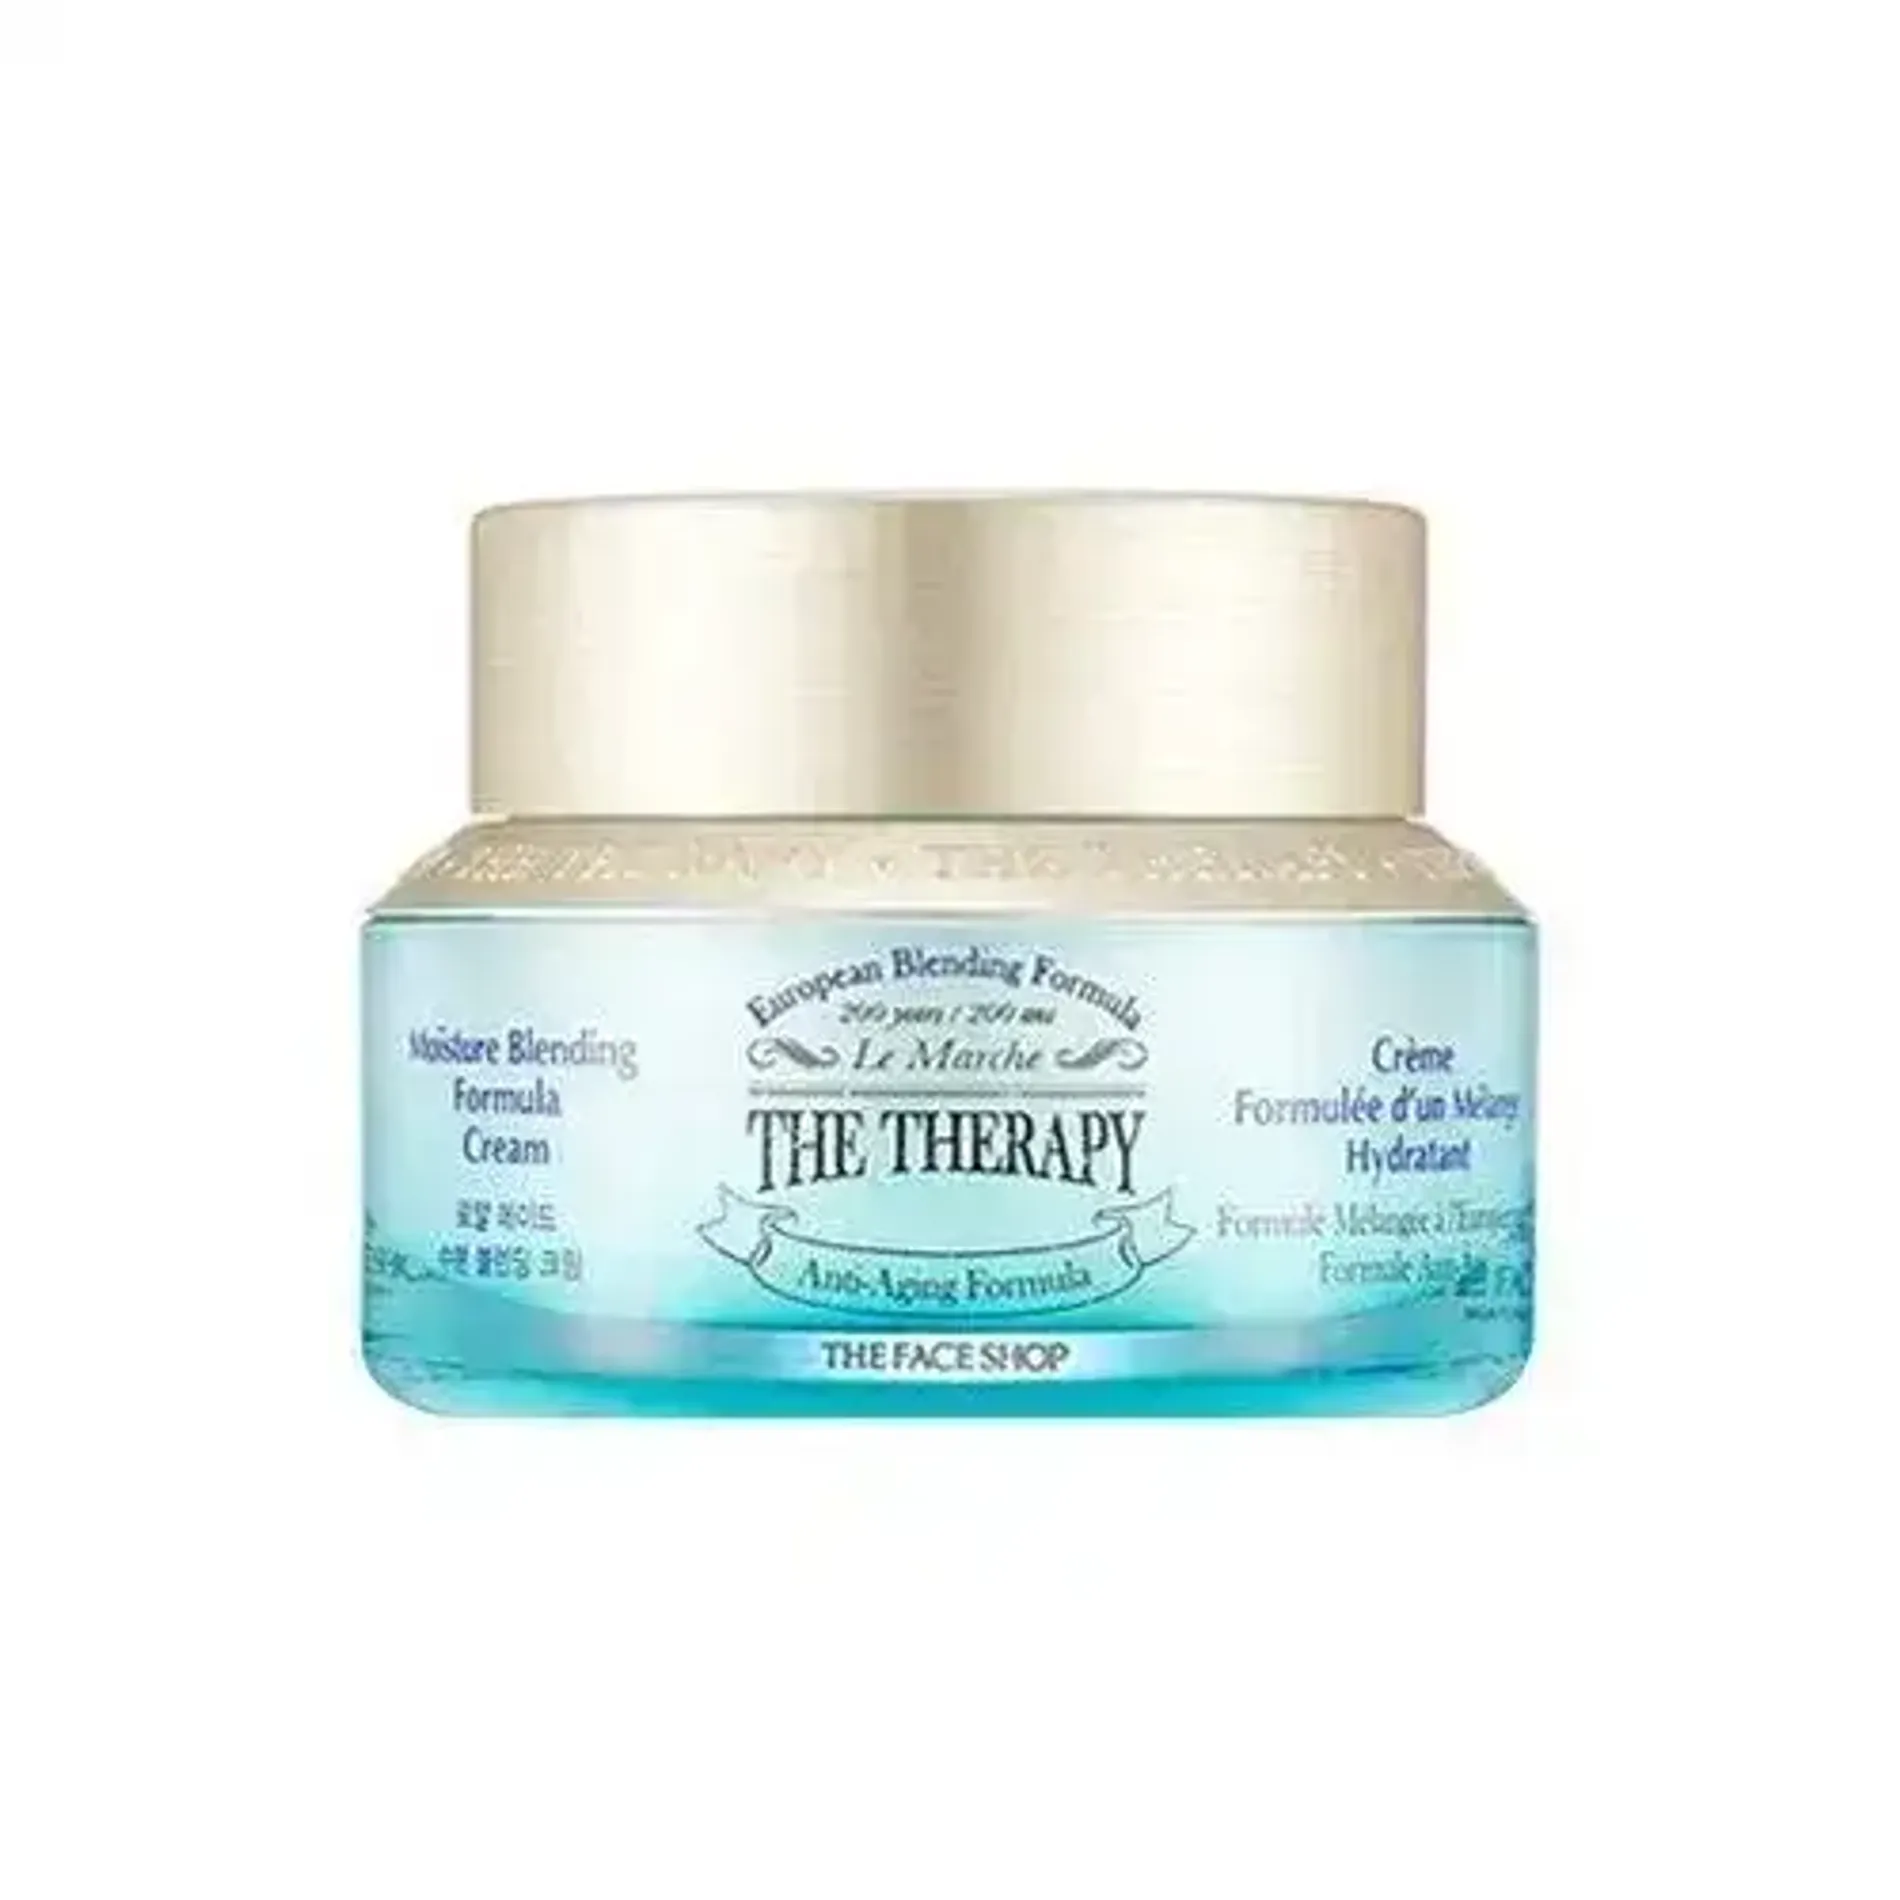 kem-duong-phuc-hoi-da-thefaceshop-the-therapy-moisture-blending-formula-cream-50ml-2